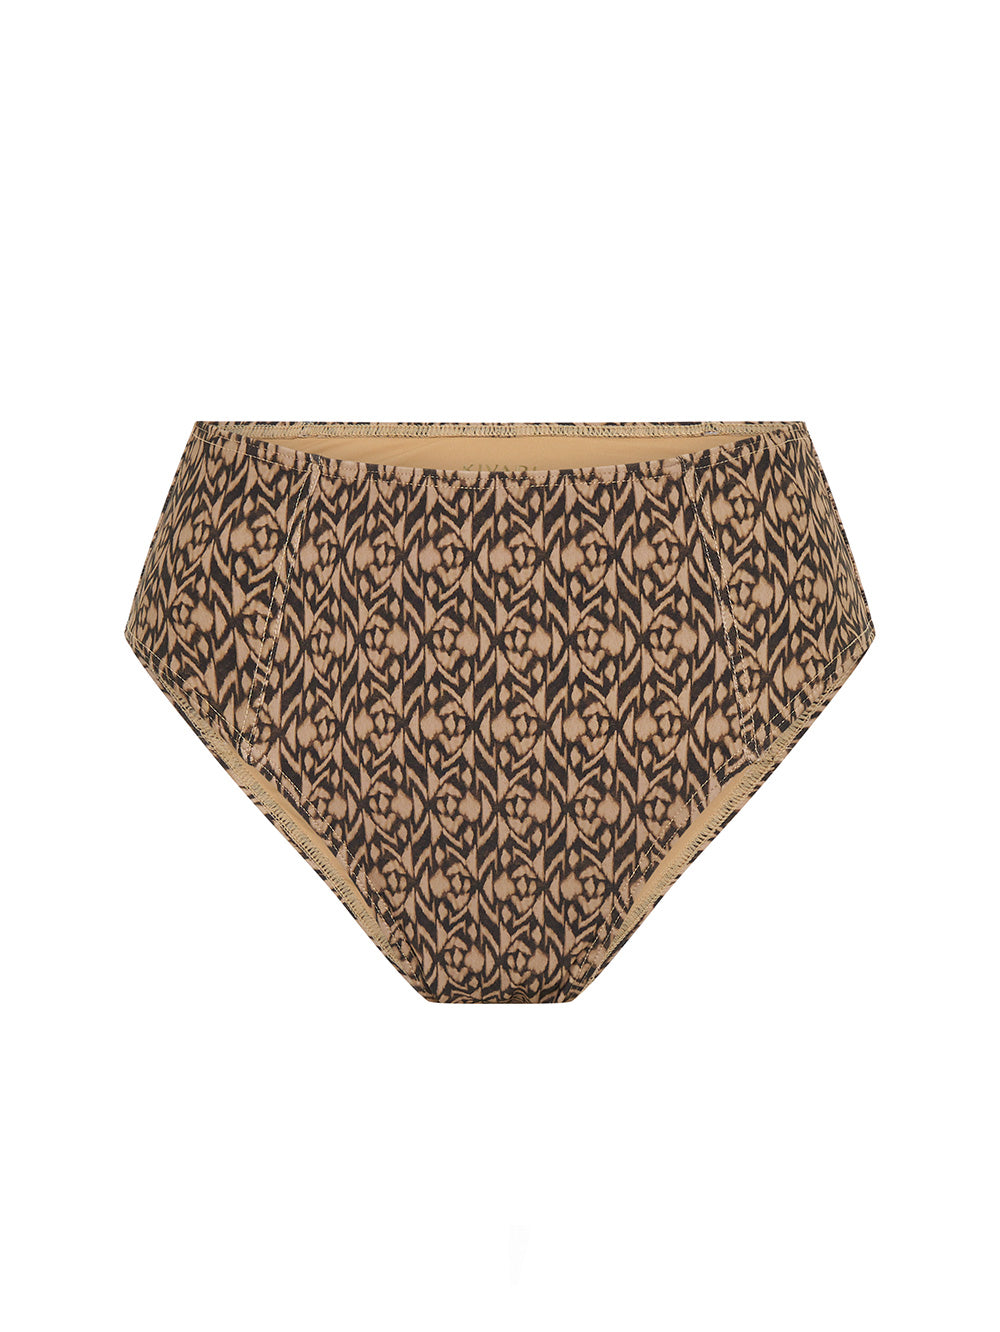 Marisa Panelled Bikini Bottom KIVARI | Brown and ivory aztek printed bikini bottoms